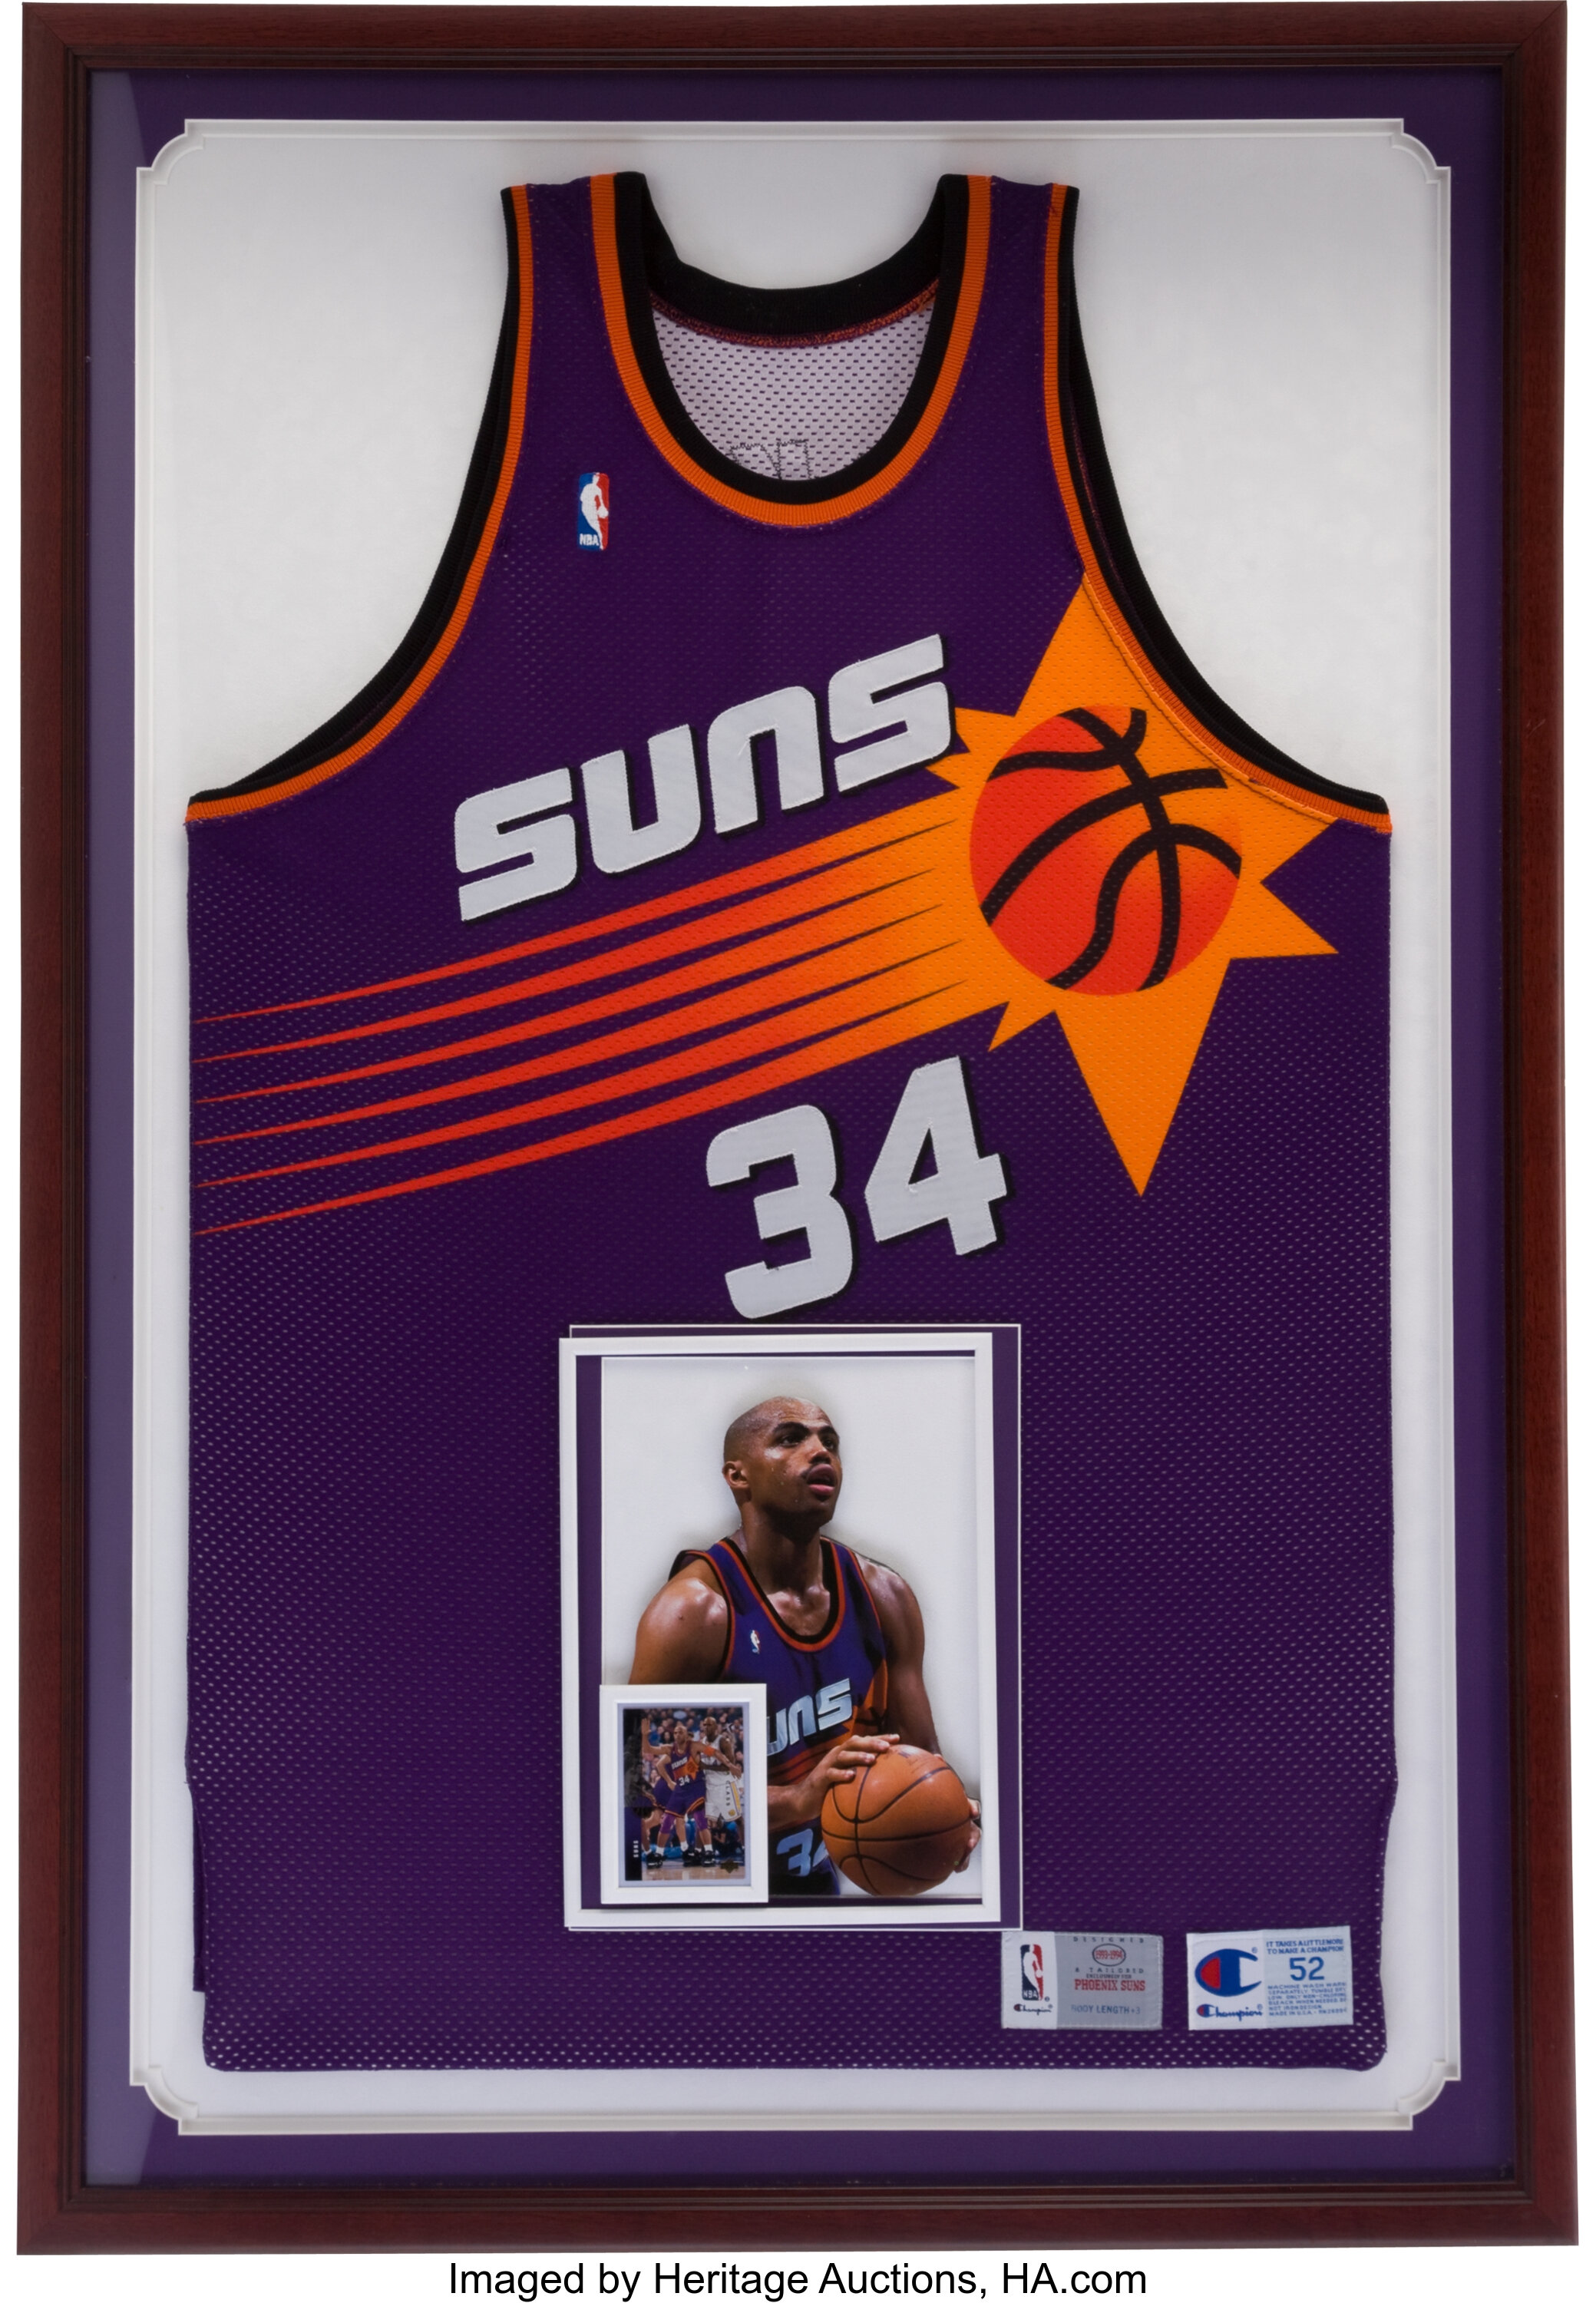 1993 NBA Season MVP Phoenix Suns Charles Barkley Jersey – FibaManiac